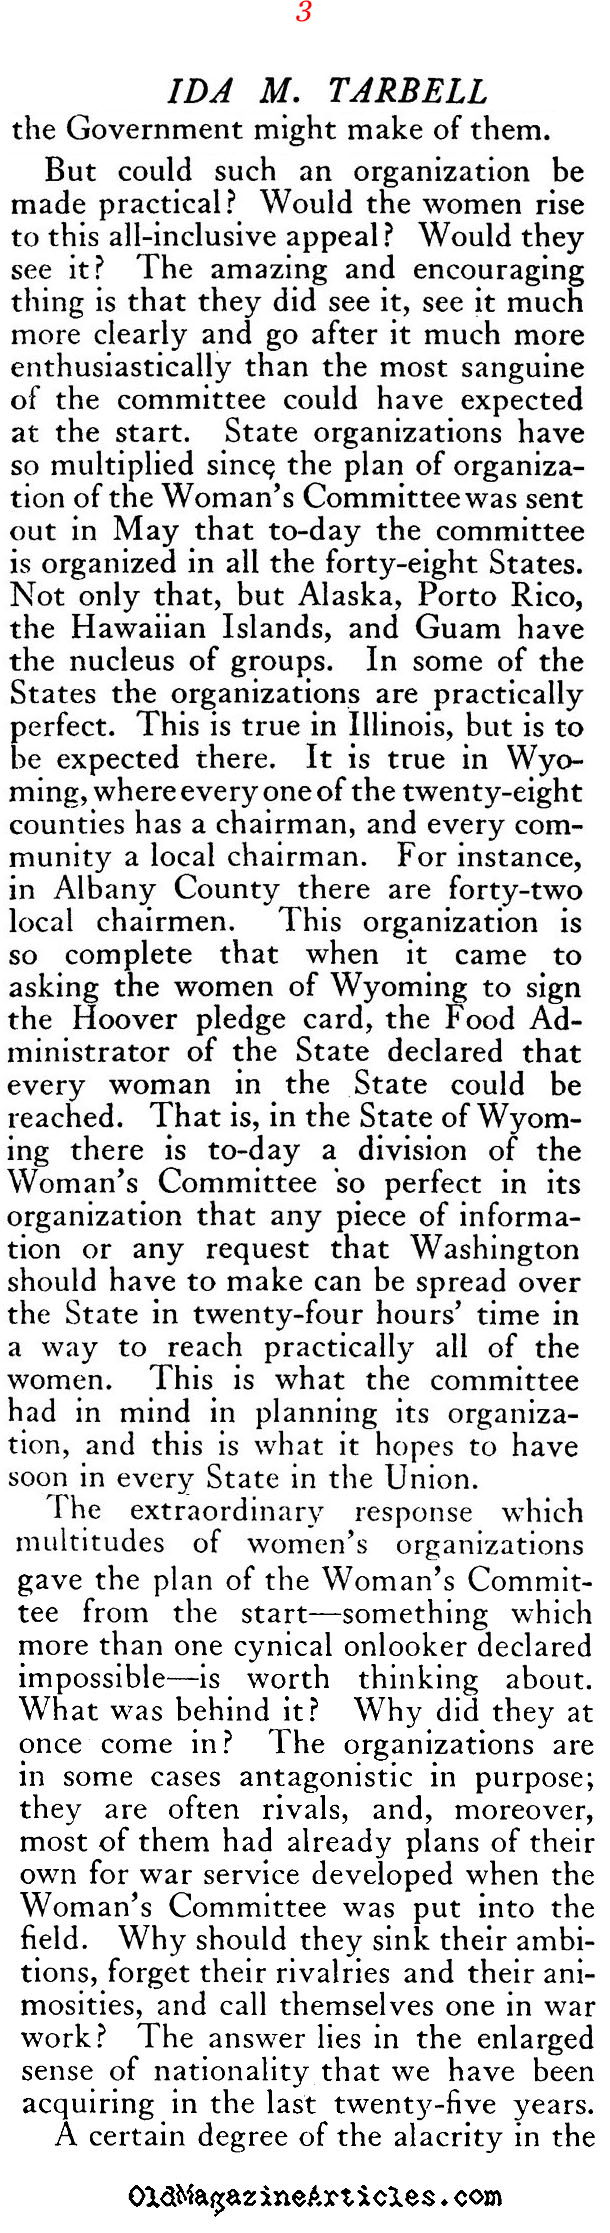 Winning the War with Women (Harper's Monthly, 1917)